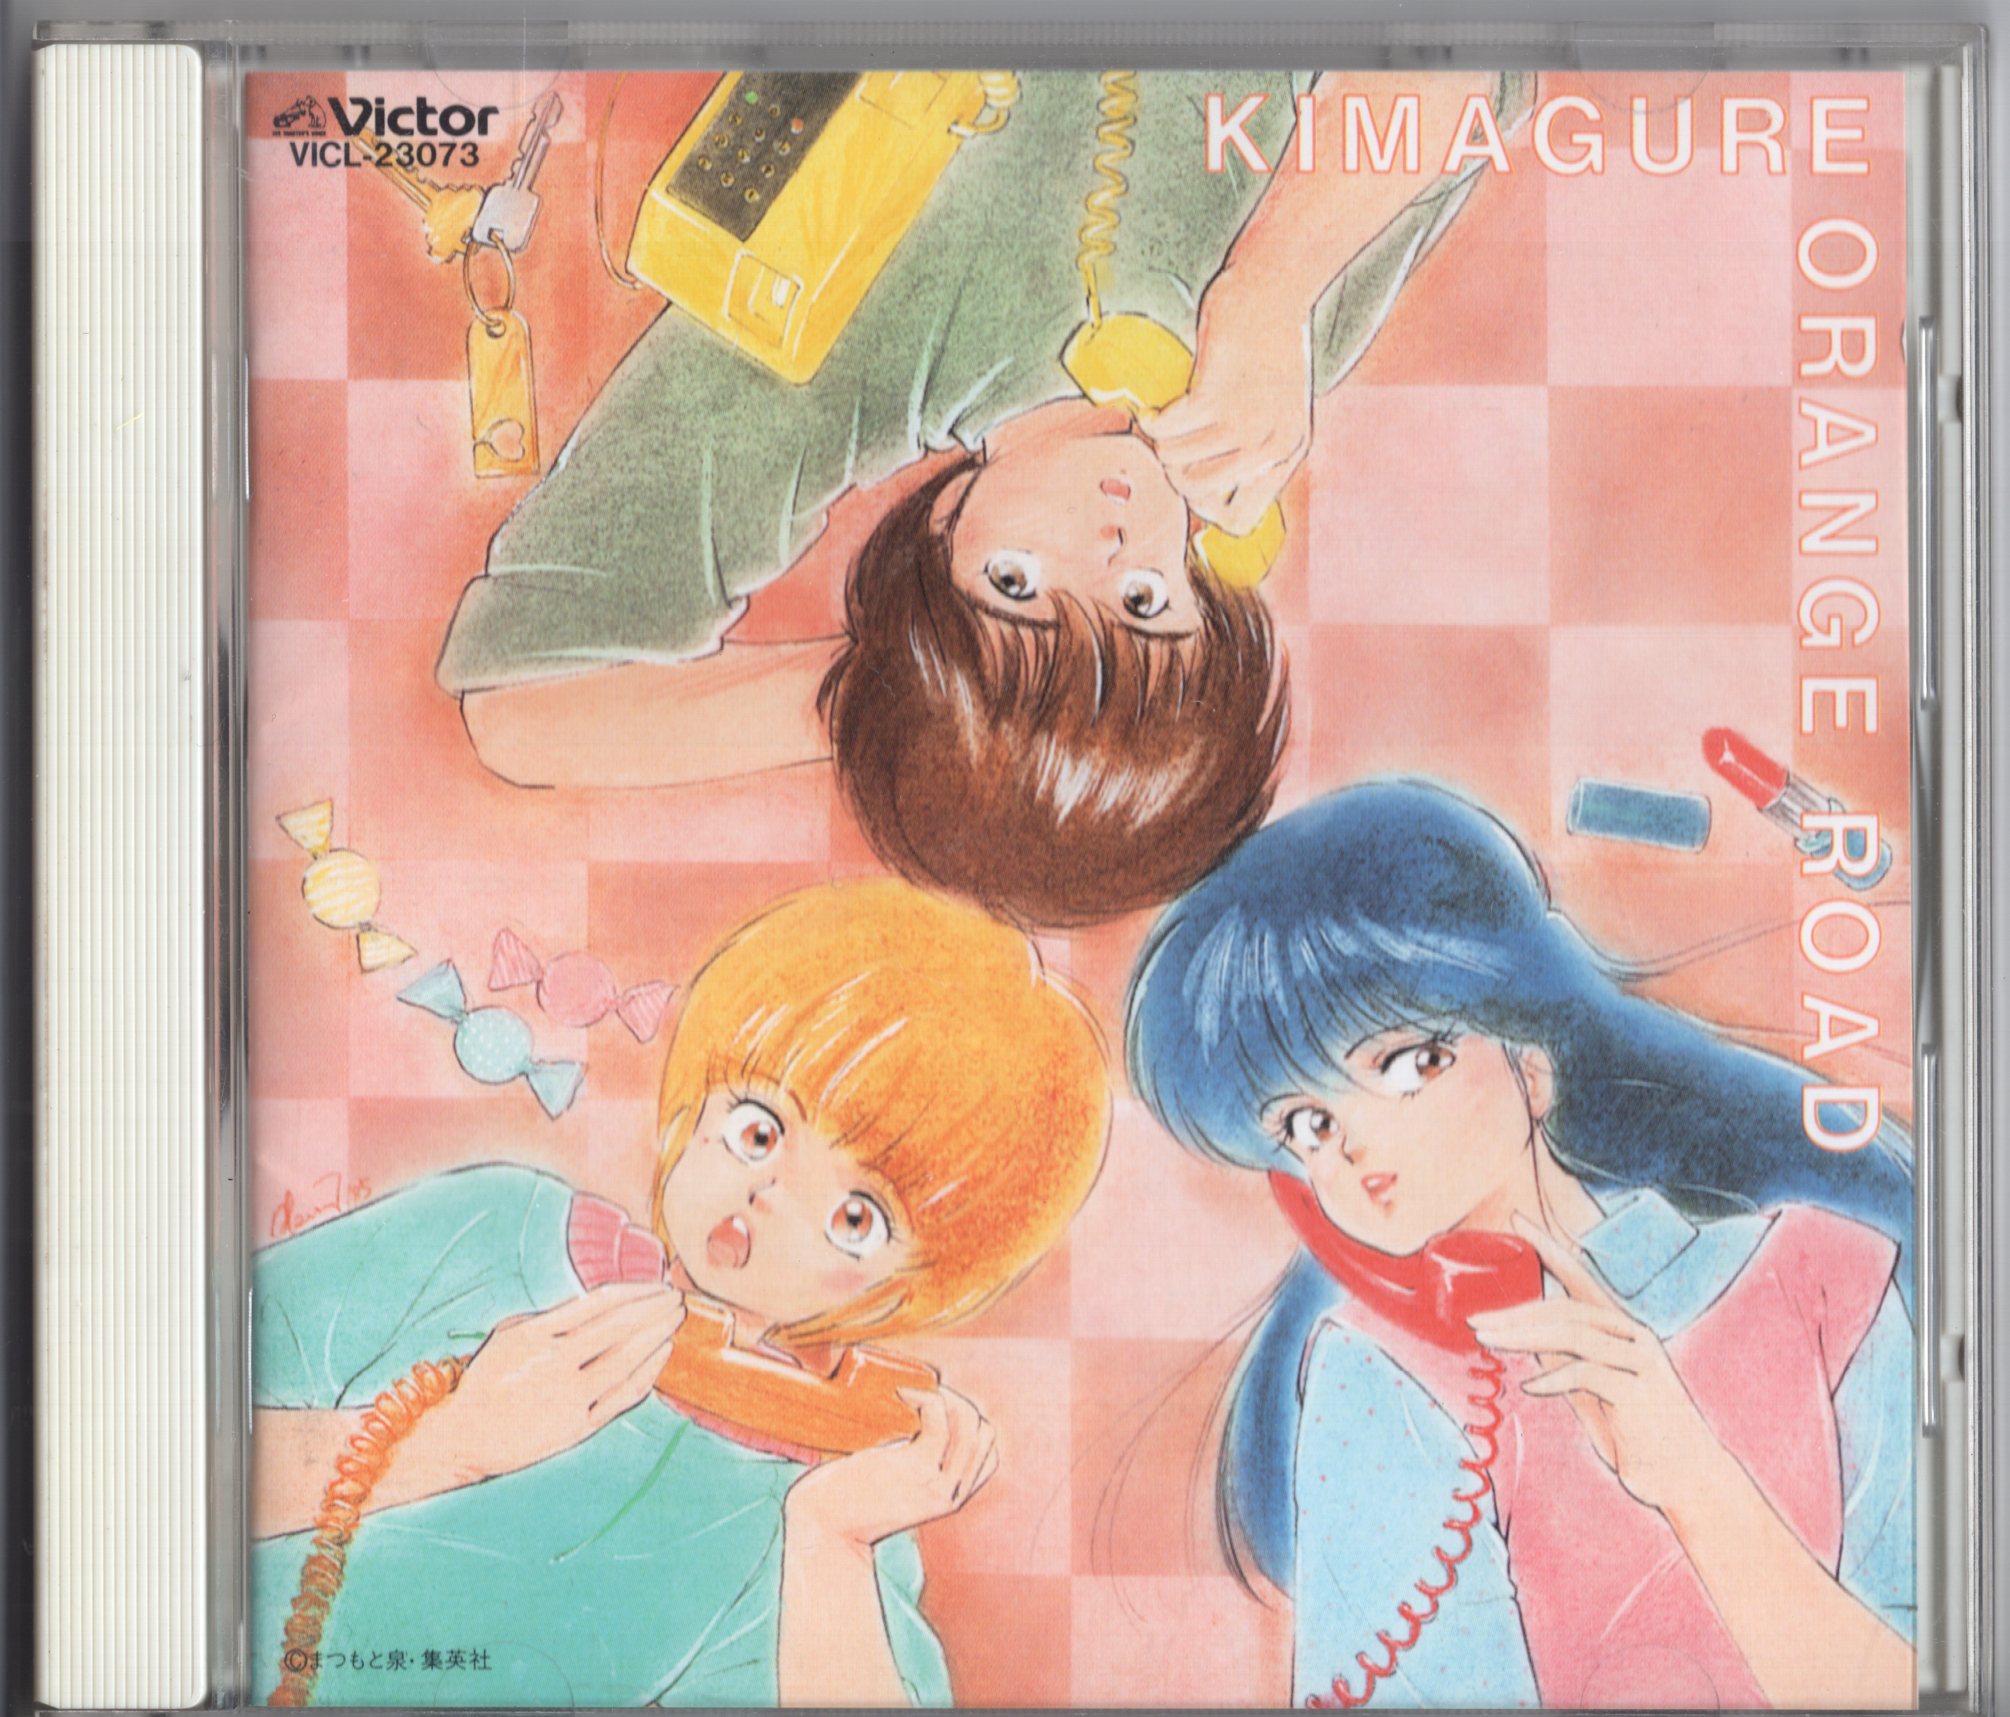 Kimagure Orange Road Anime Douga | SoulofTokyo